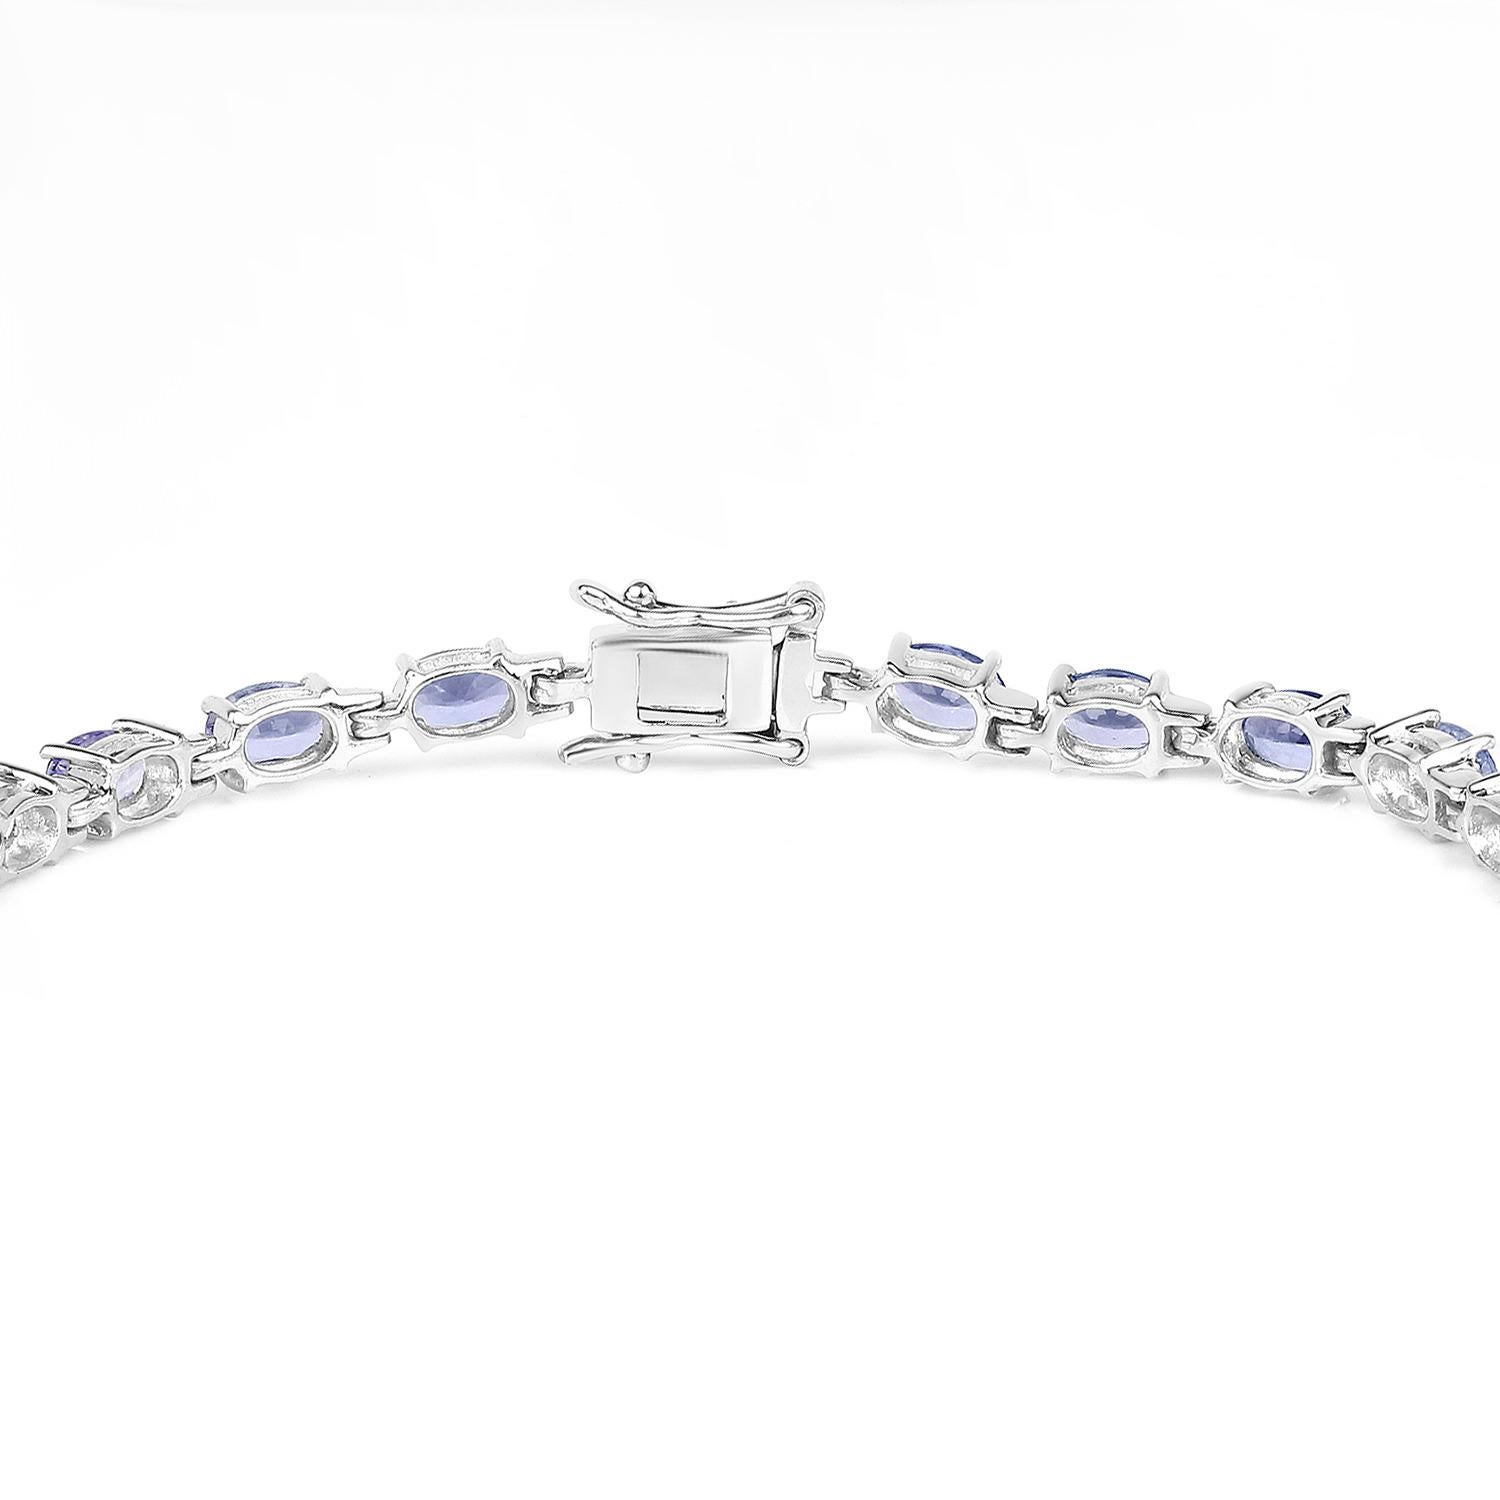 Oval Cut Tanzanite Tennis Bracelet 9.7 Carats Sterling Silver For Sale